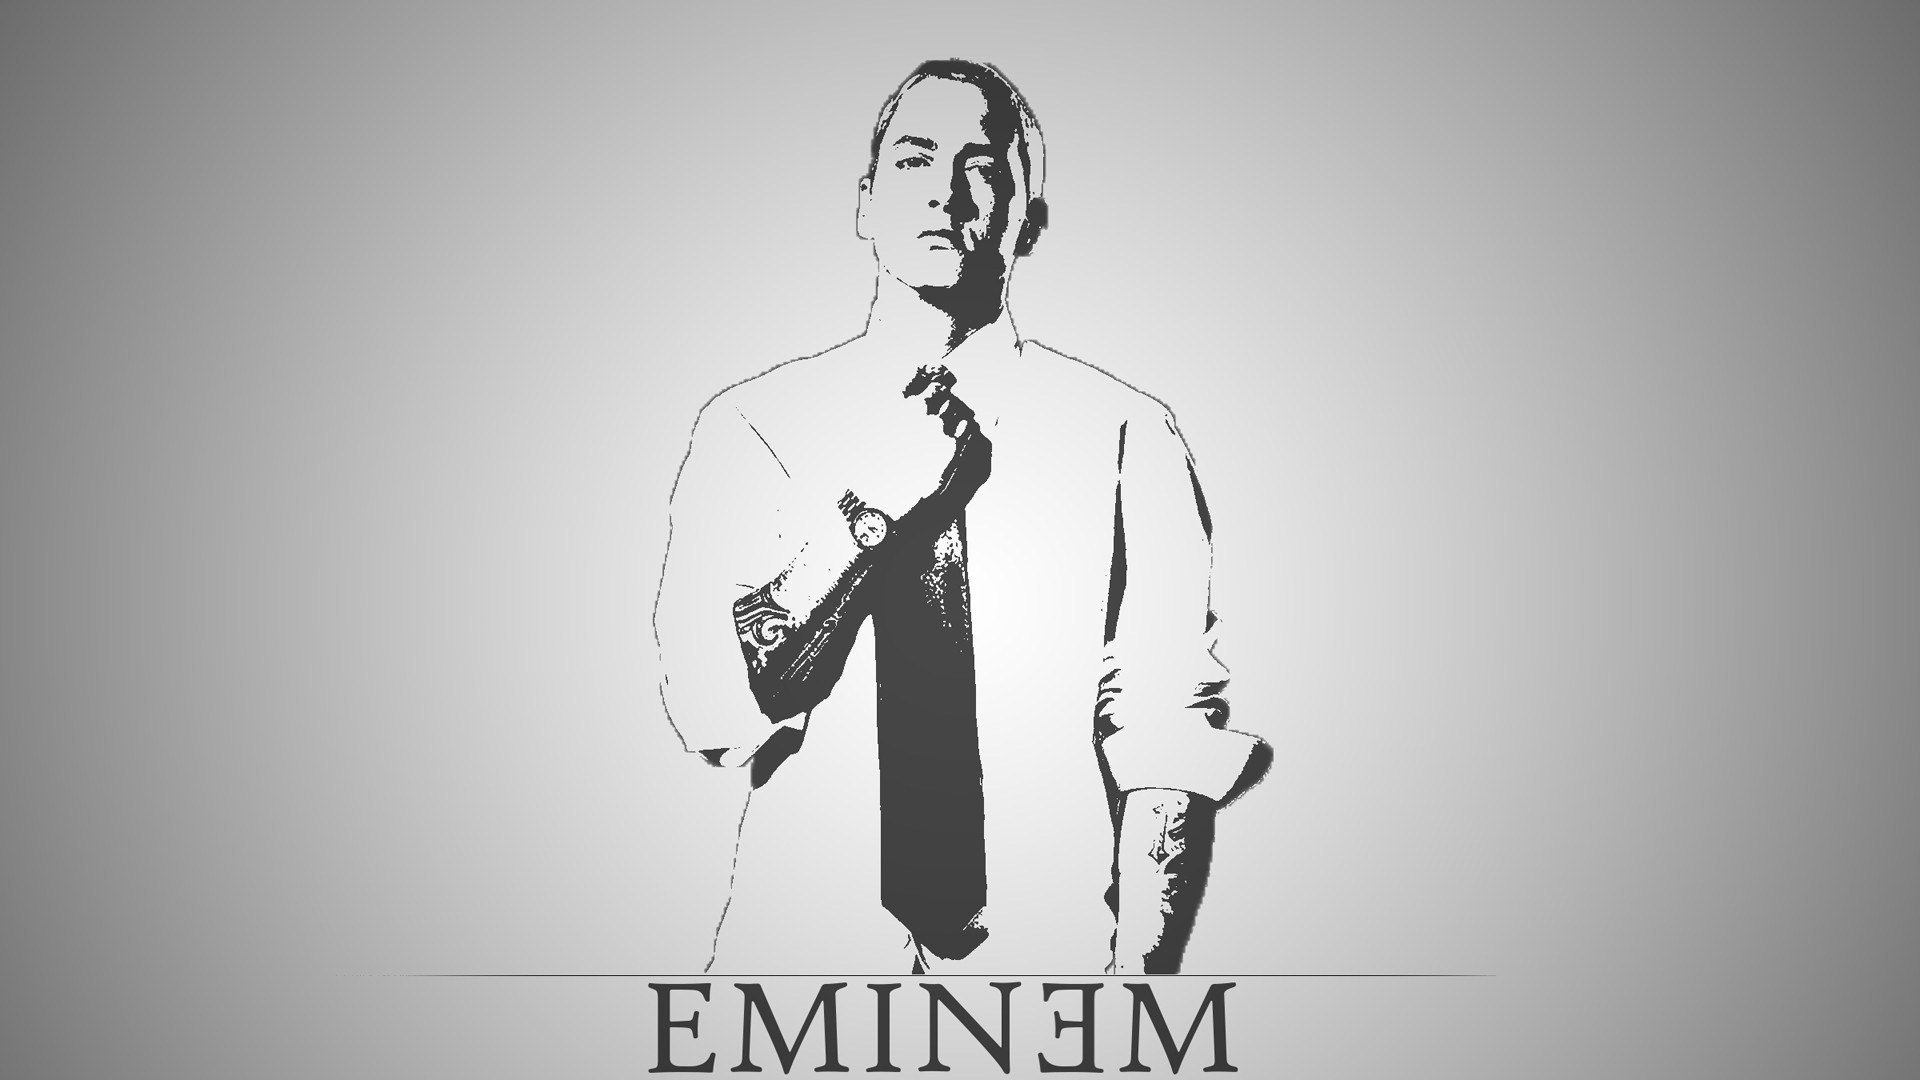 1920x1080 Eminem Wallpaper Not Afraid | HD Wallpapers | Pinterest | Eminem, Hd  wallpaper and Wallpaper